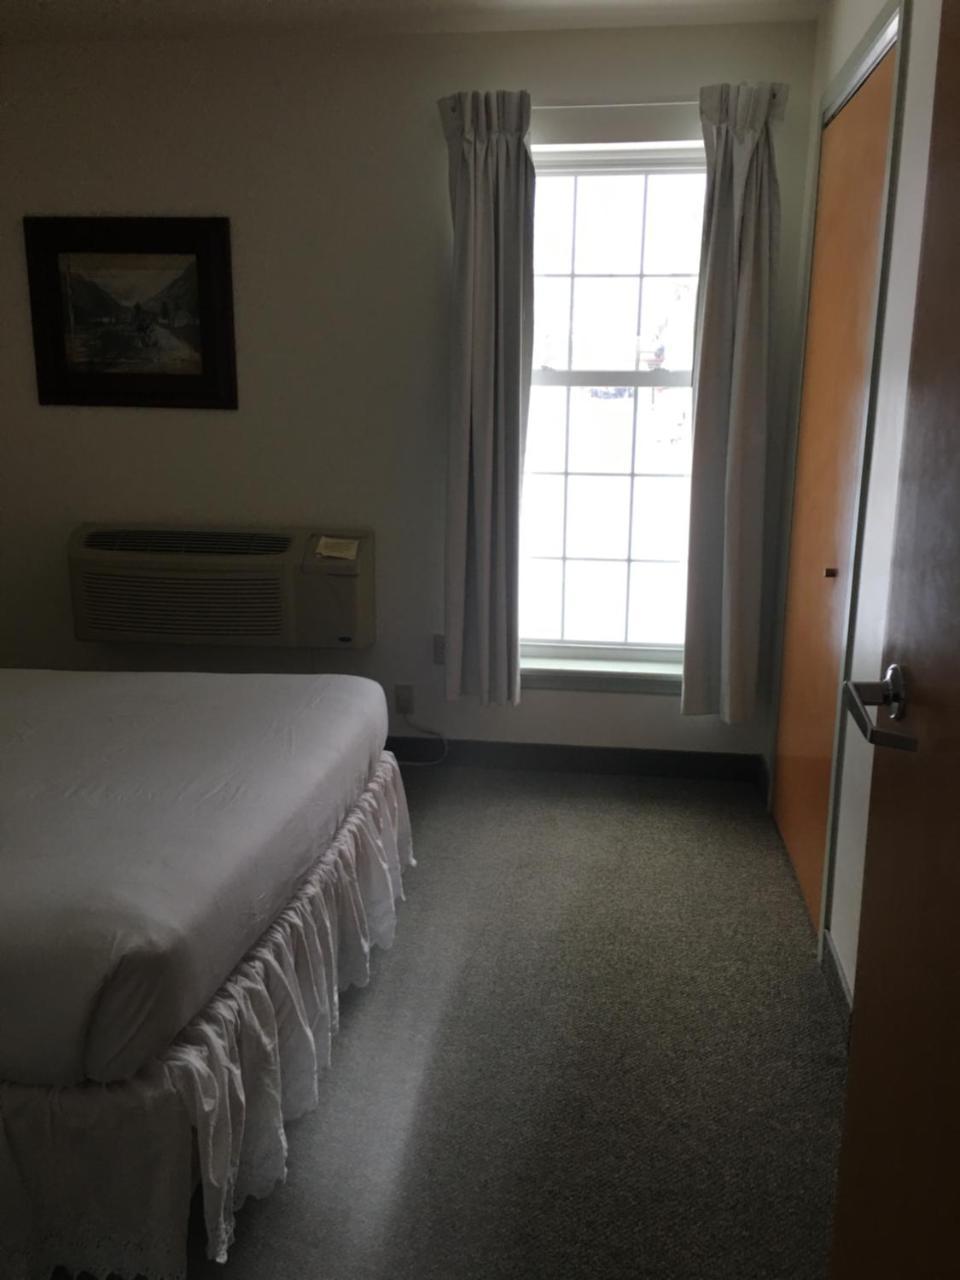 All Suites Inn Budget Host Lewisburg Exterior photo